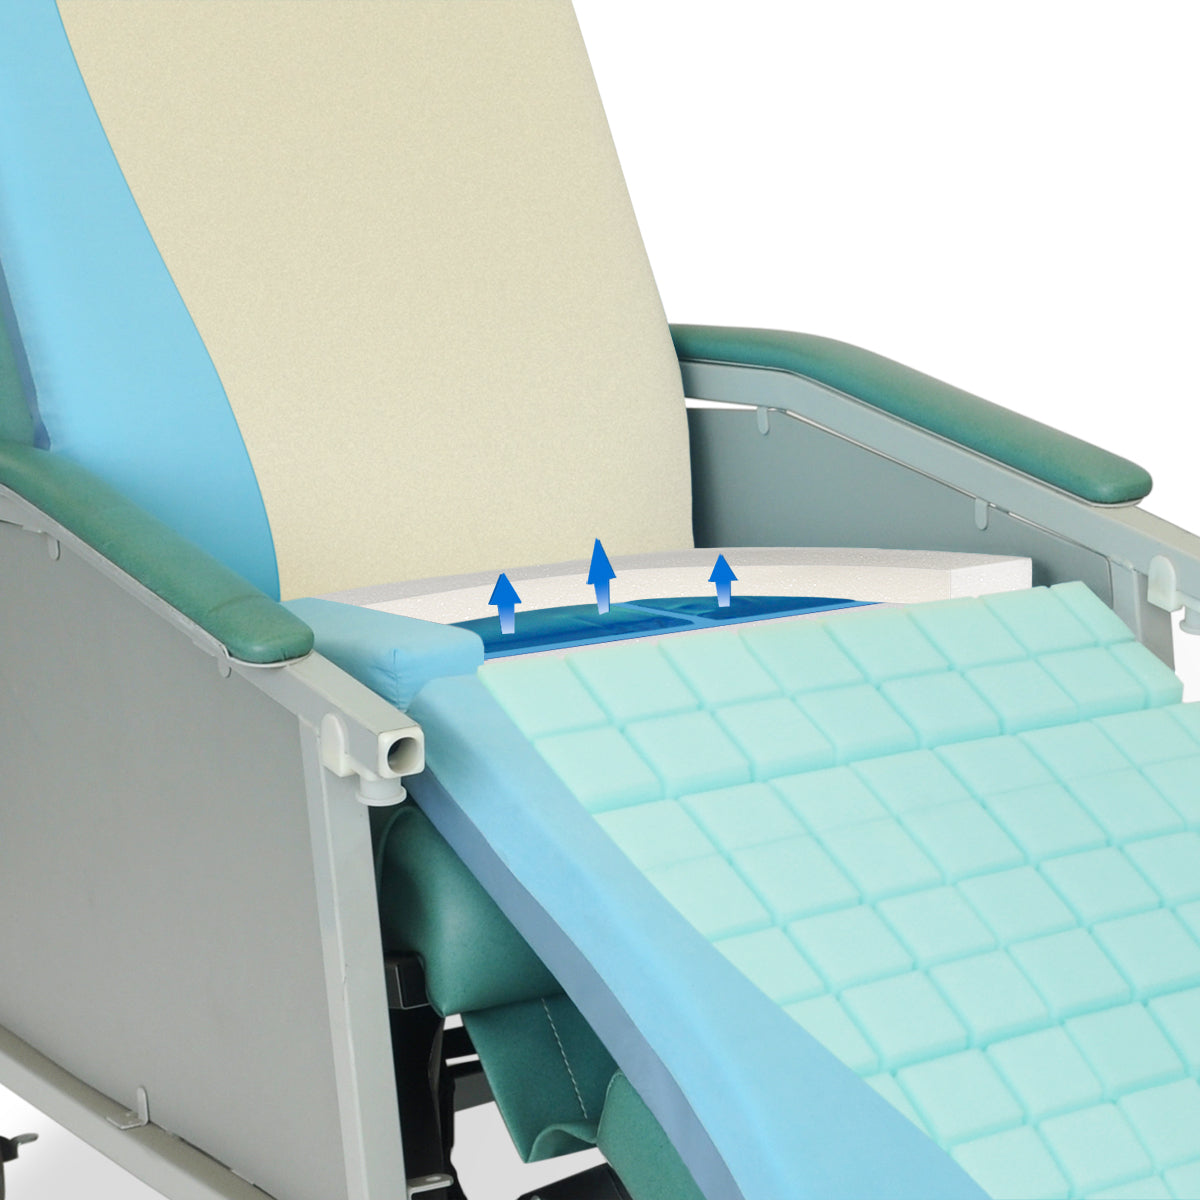 METRIS™ Comfort Seat, 72”L x 19”W x 3H”, Geri-Chair